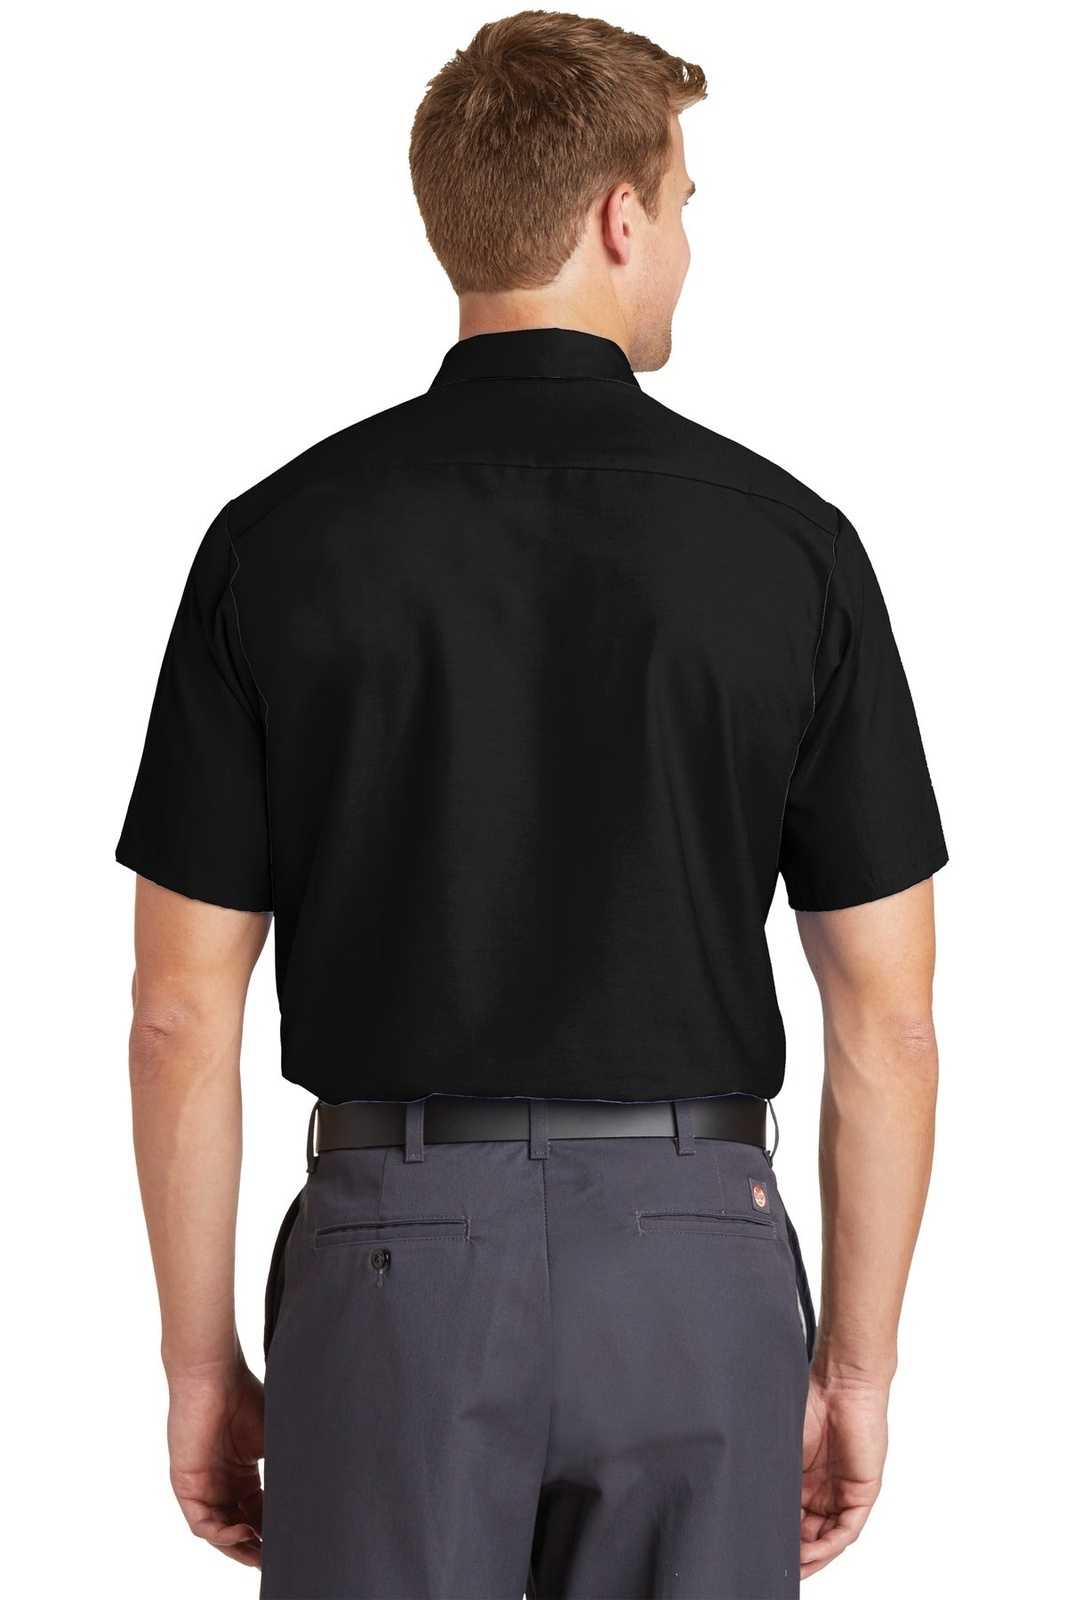 Red Kap SP24 Short Sleeve Industrial Work Shirt - Black - HIT a Double - 2